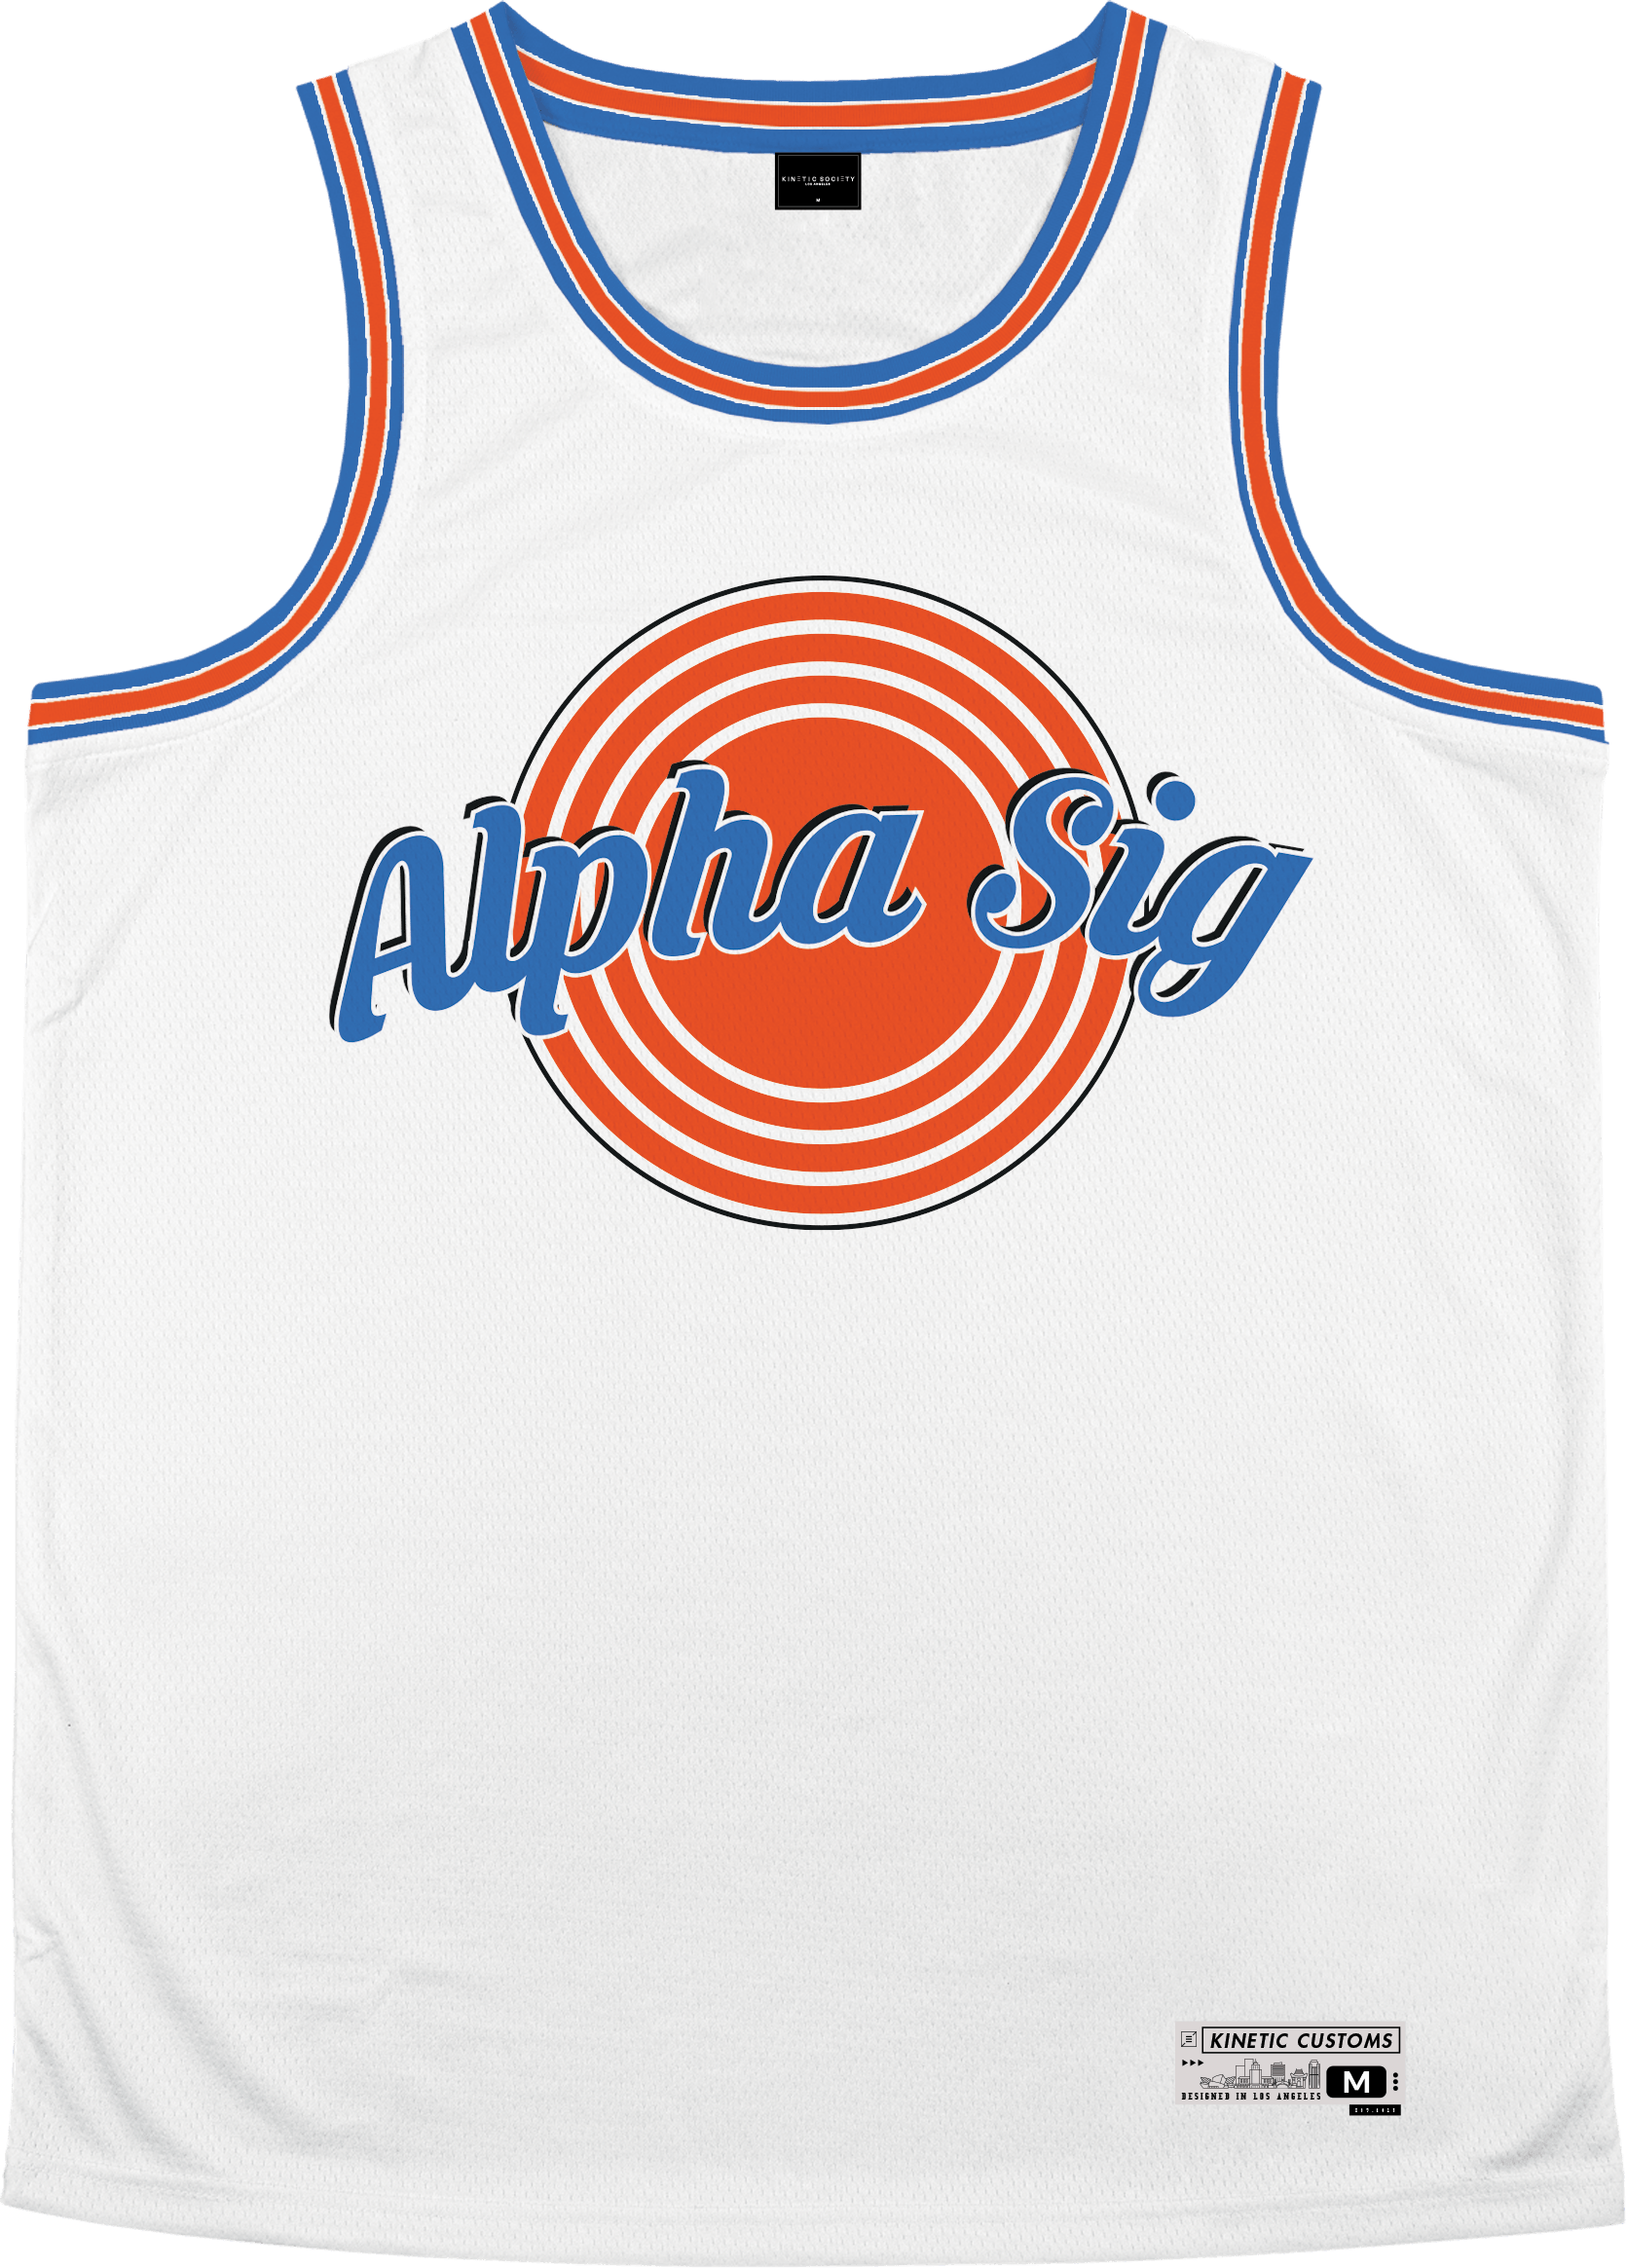 Alpha Sigma Phi - Vintage Basketball Jersey - Kinetic Society